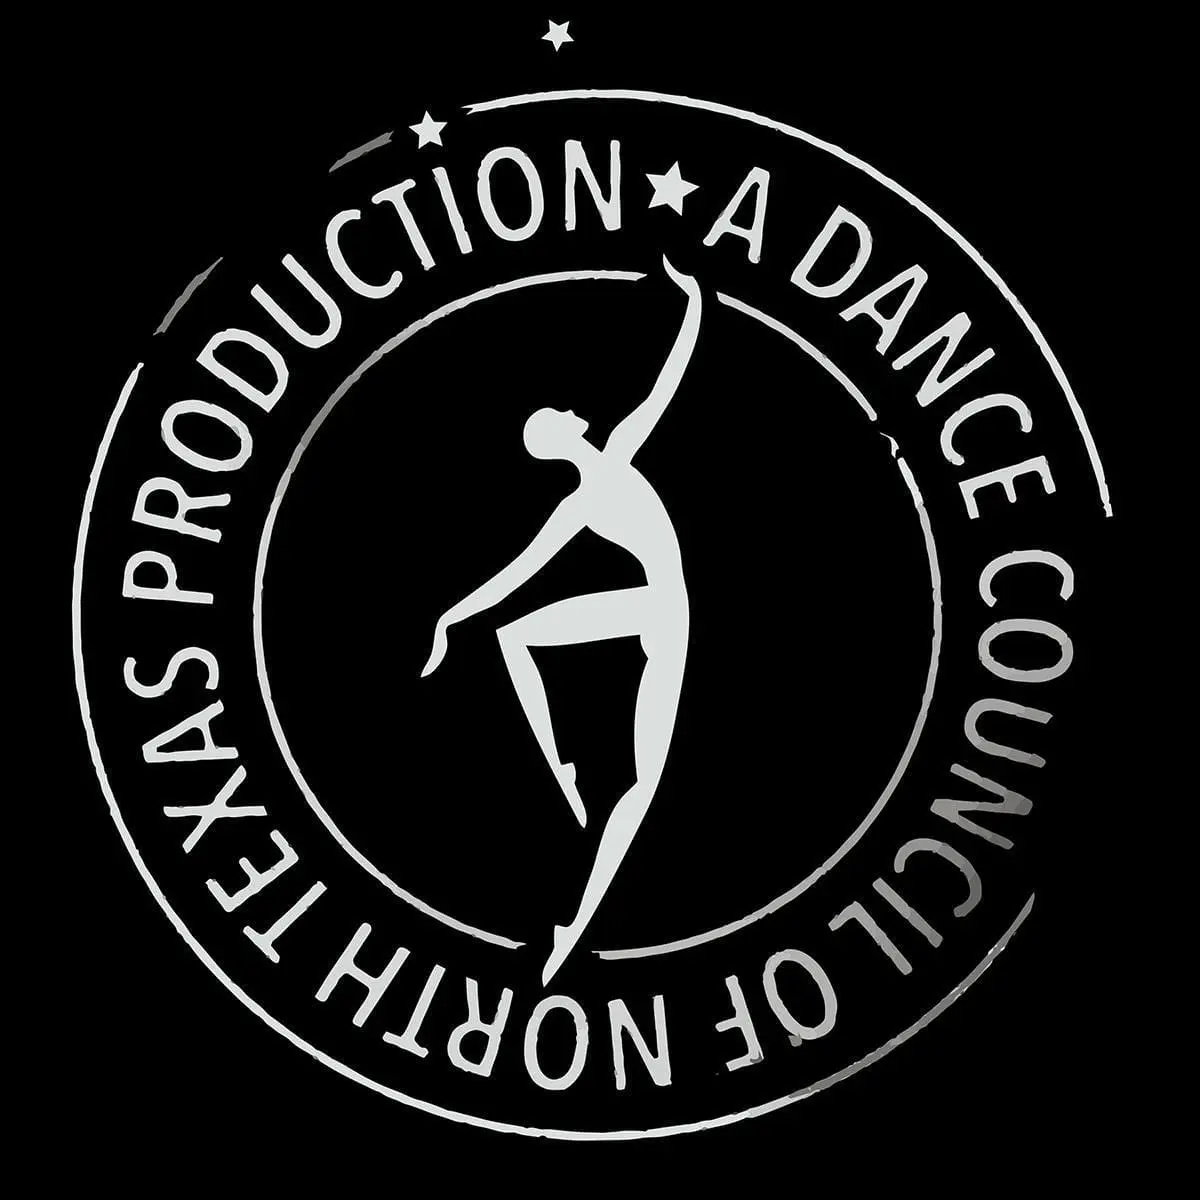 Dance Council of North Texas logo